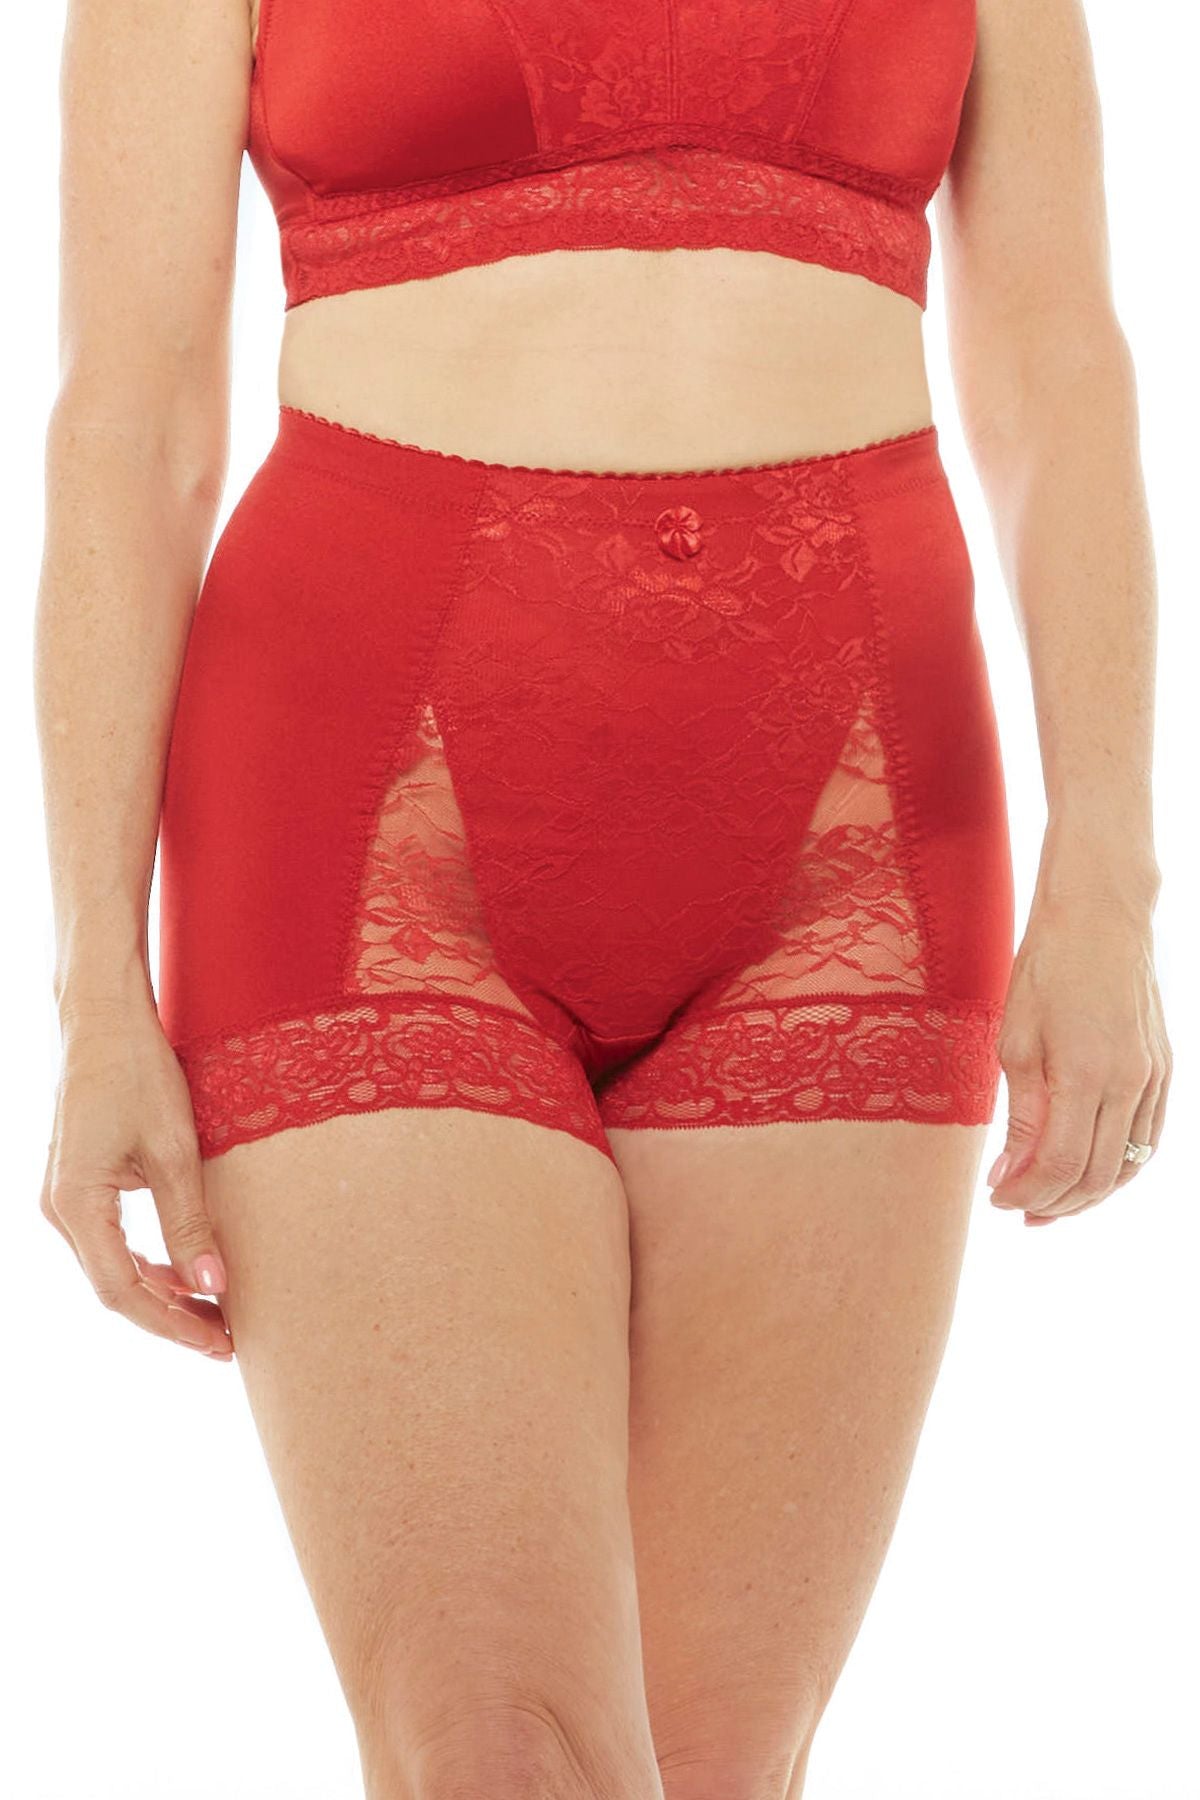 .com: lkpoijuh Teen Lace Women's Underwear Transparent